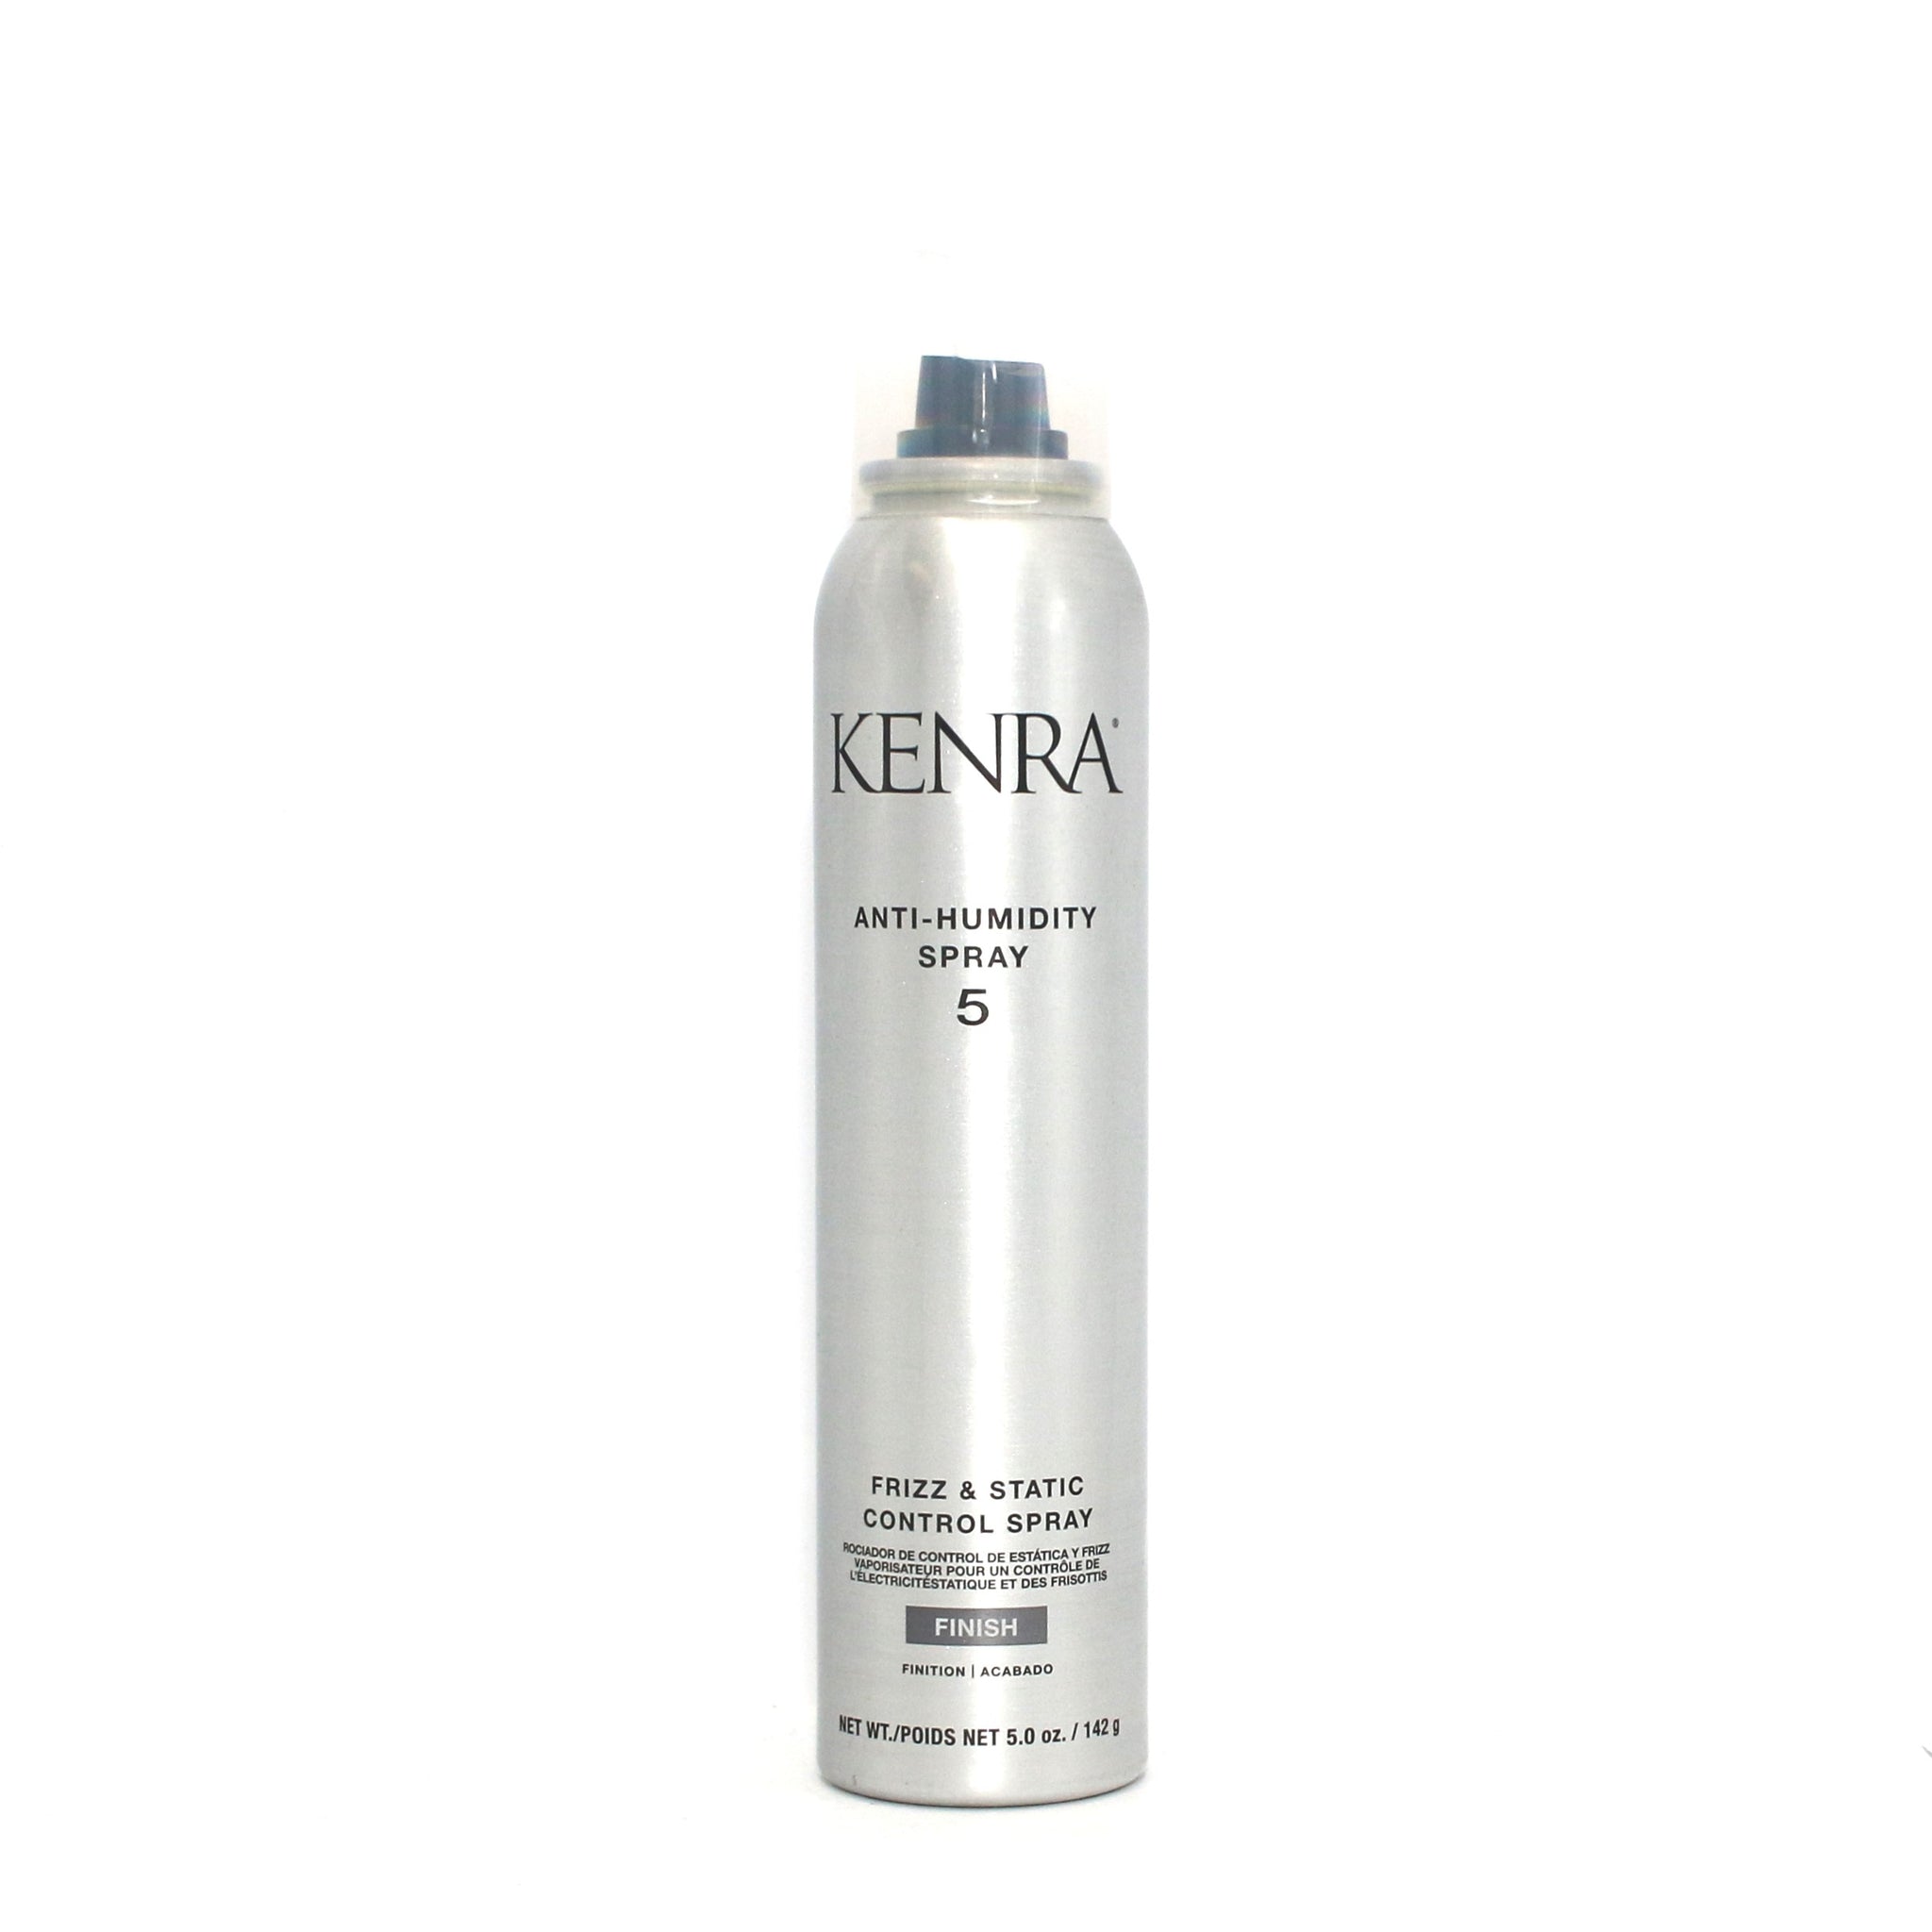 KENRA Anti- Humidity Spray 5 Finish 5.0 oz